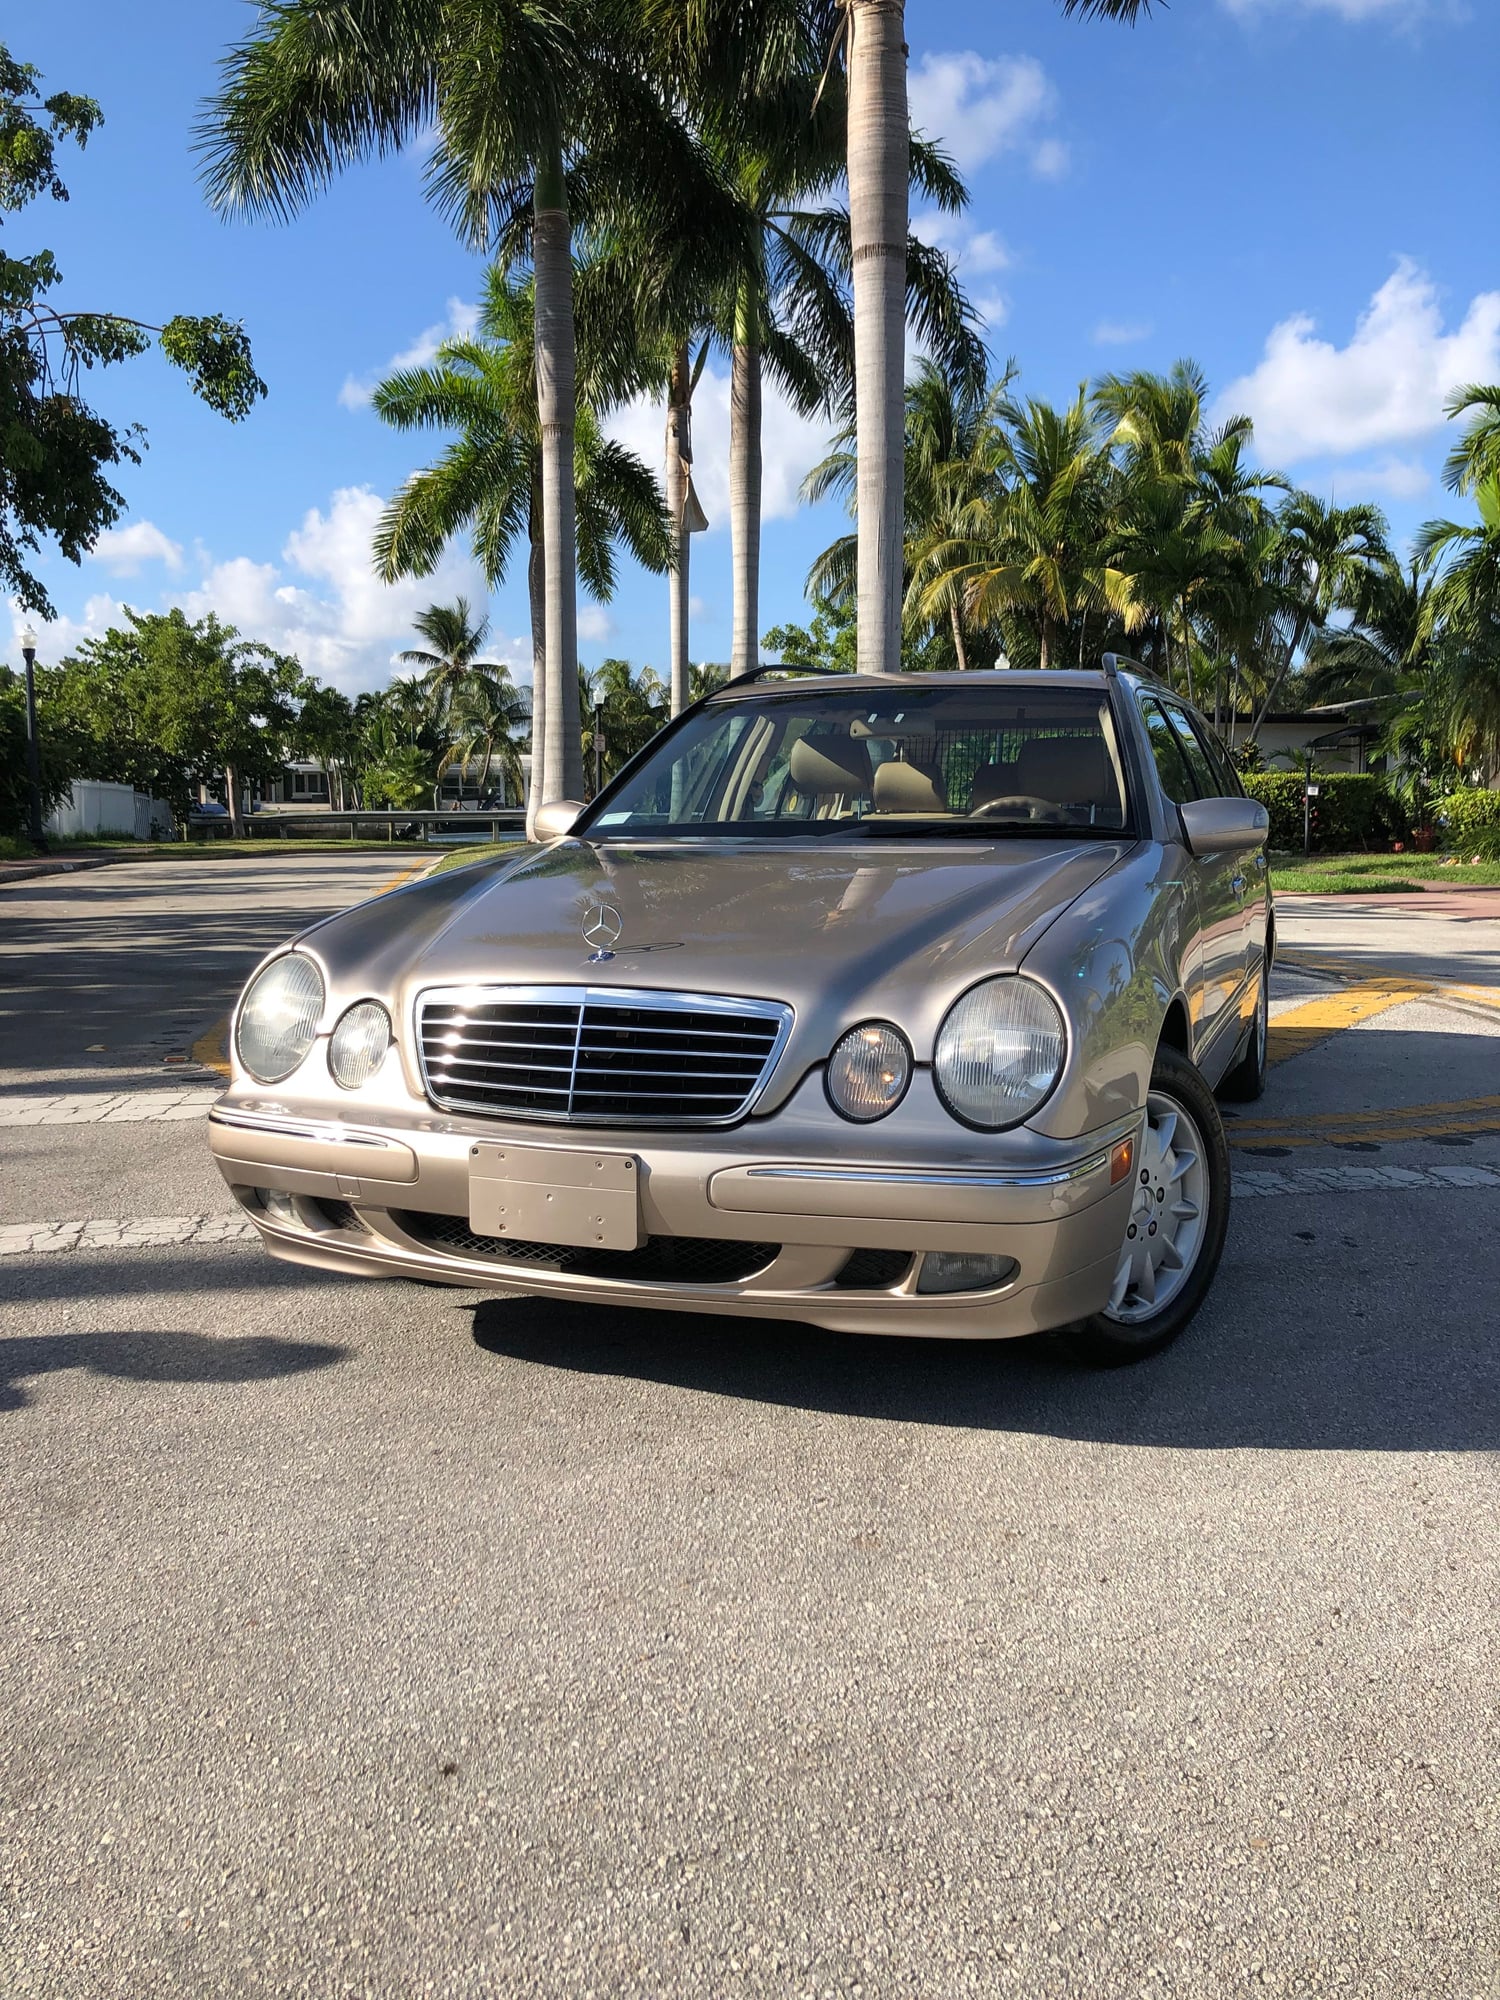 2001 Mercedes-Benz E320 - 2001 Mercedes E320 station wagon - Used - VIN WDBJH65J81B257851 - 47,000 Miles - 6 cyl - 2WD - Automatic - Wagon - Beige - Miami, FL 33141, United States